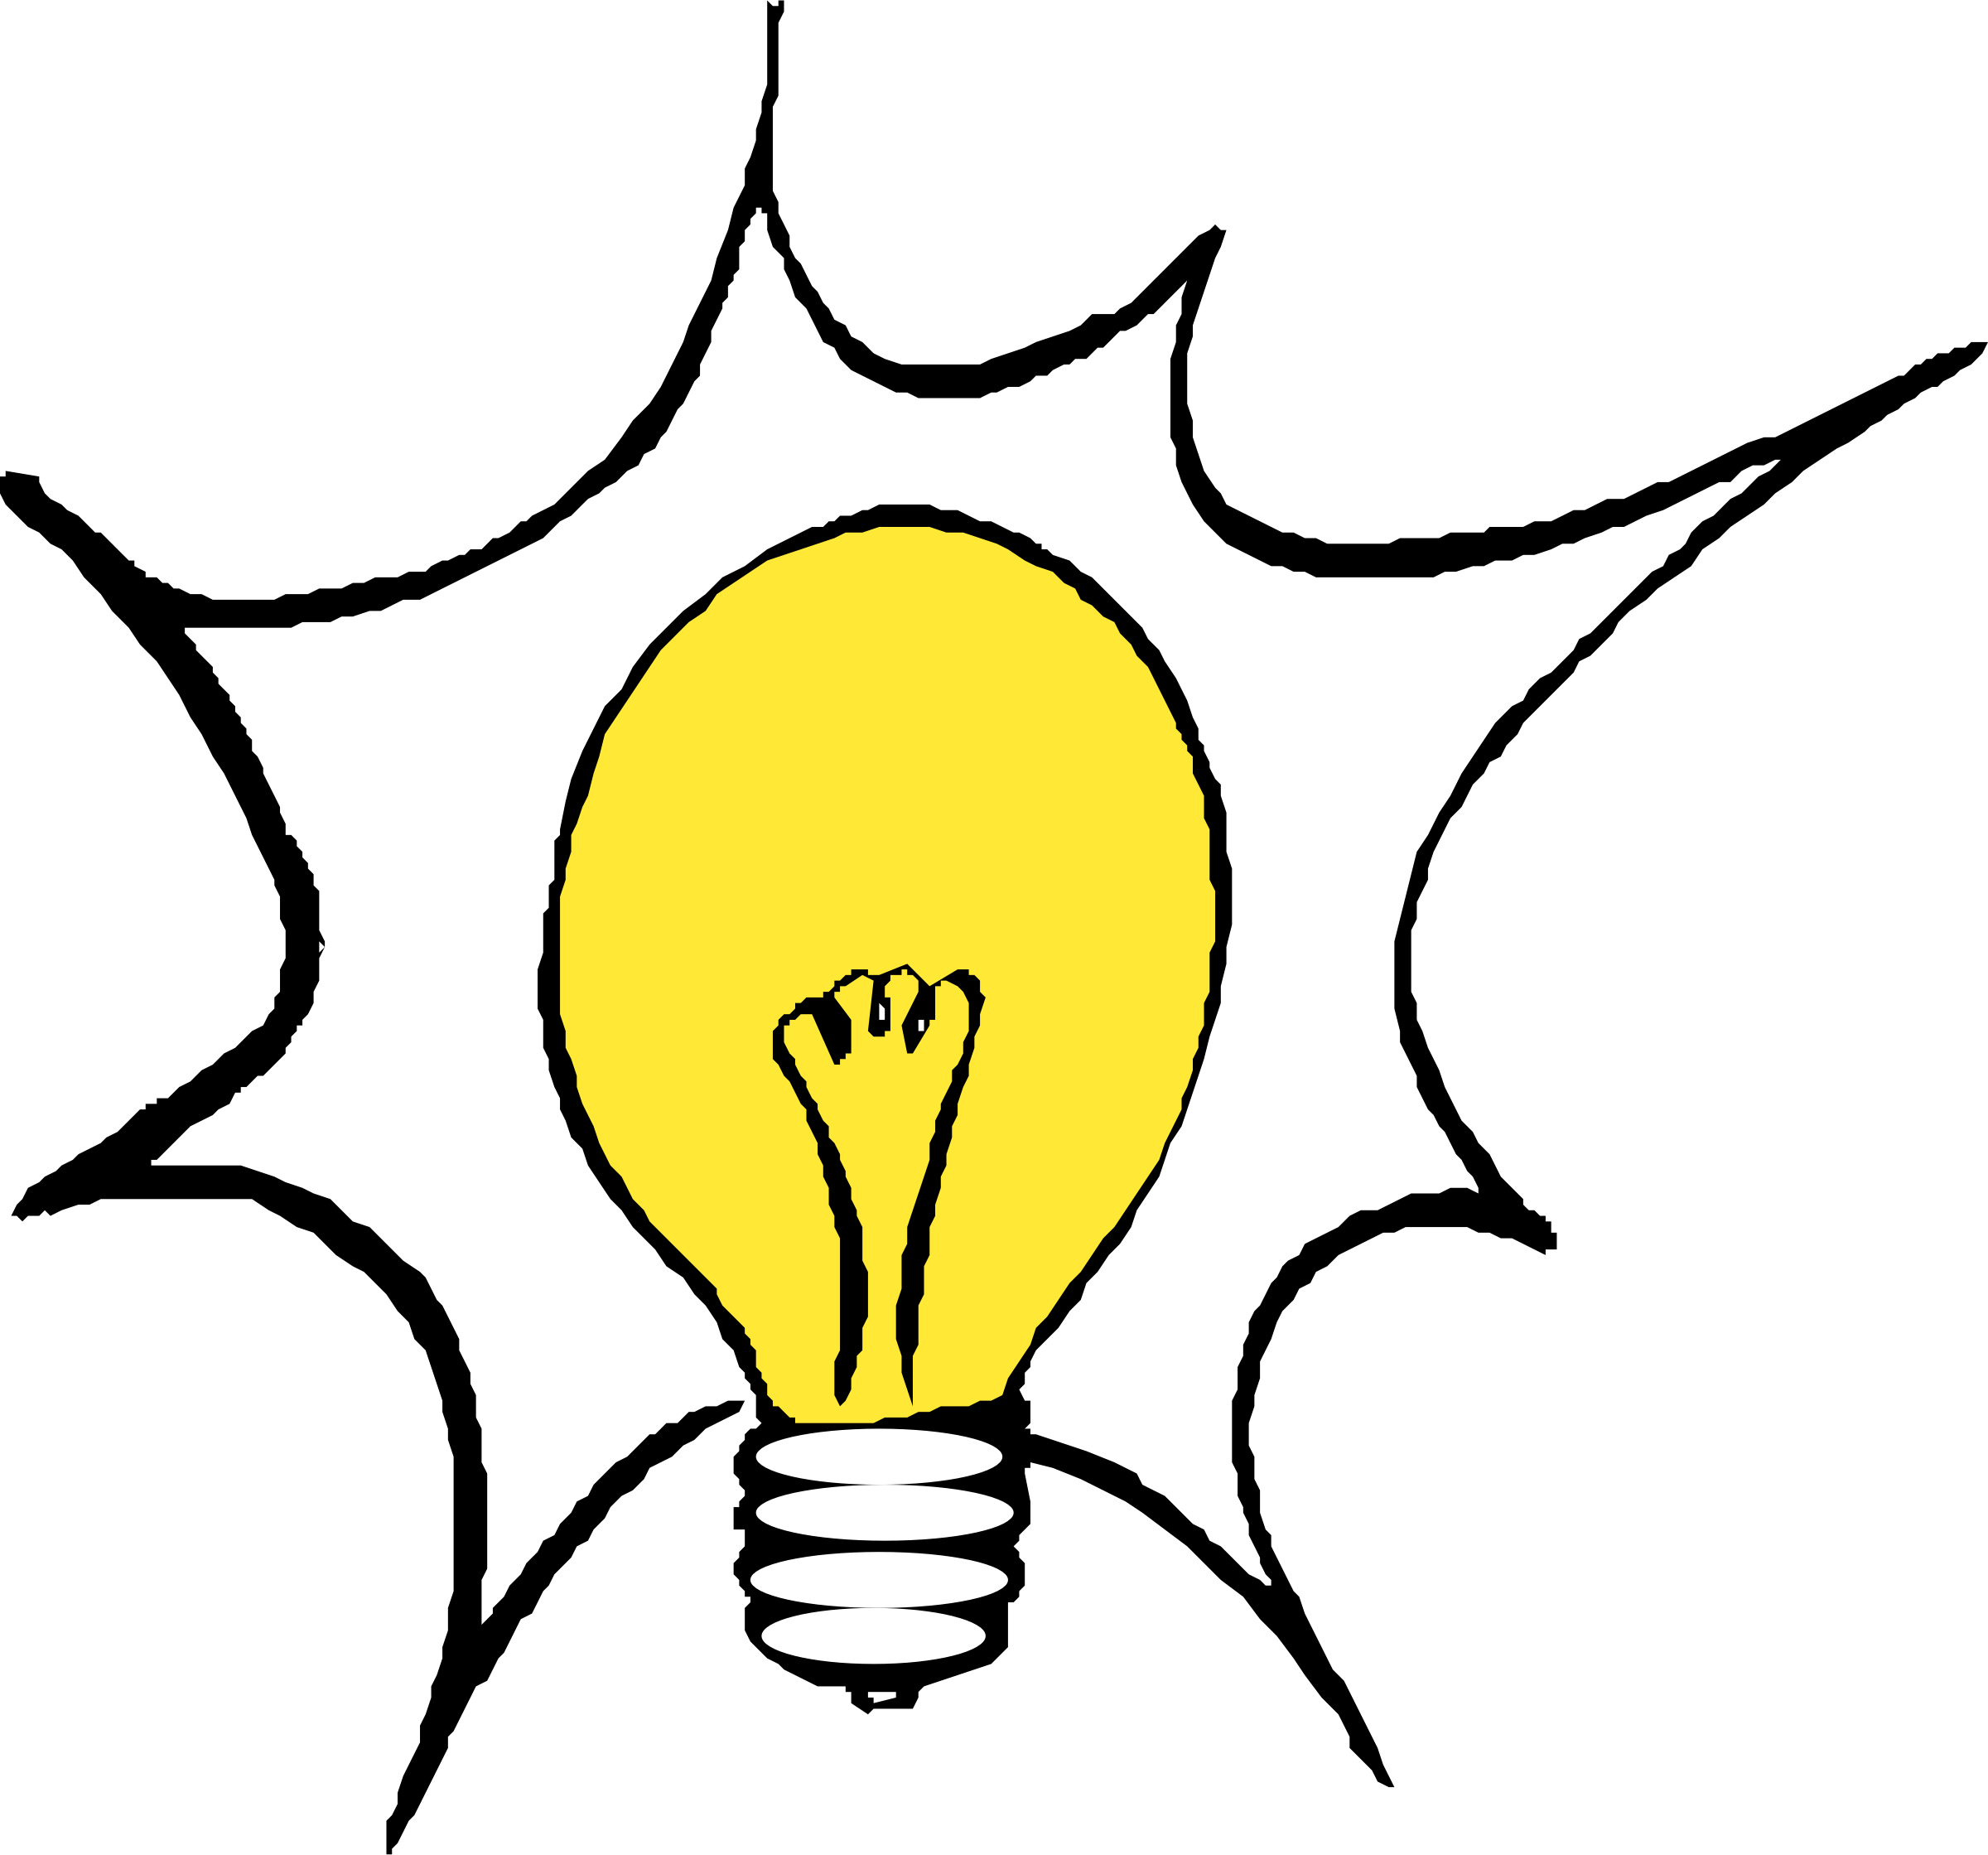 Lightbulb light bulb clip art at vector 2 image